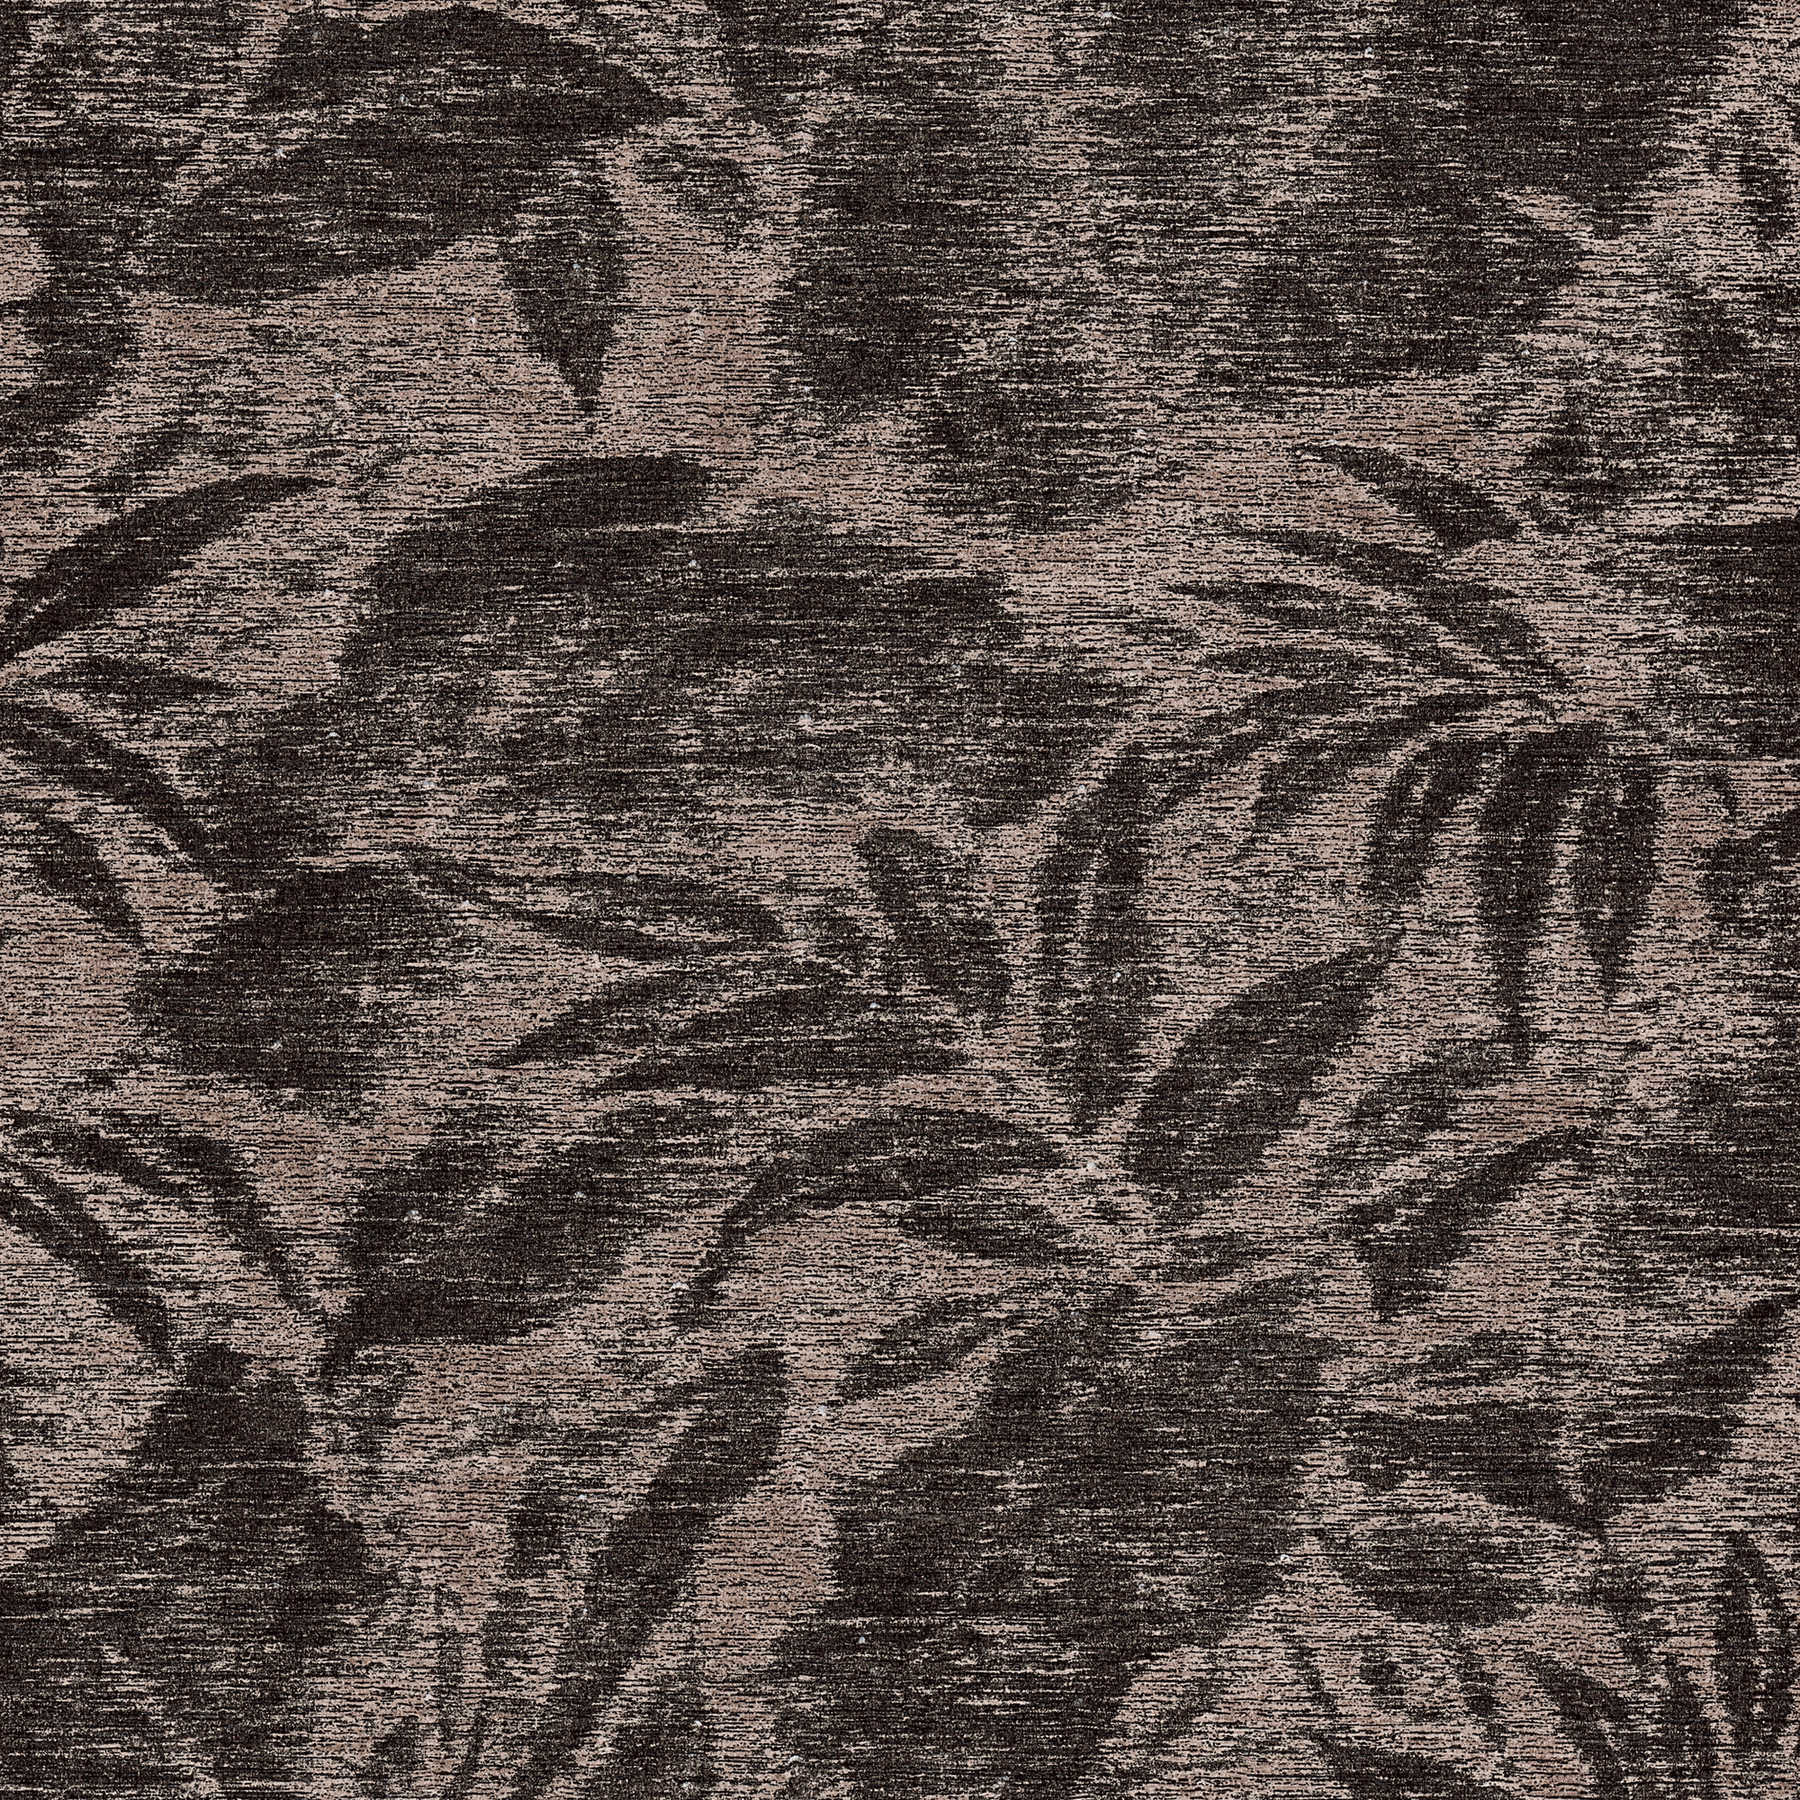 Non-woven wallpaper leaf pattern, mottled - black, brown
